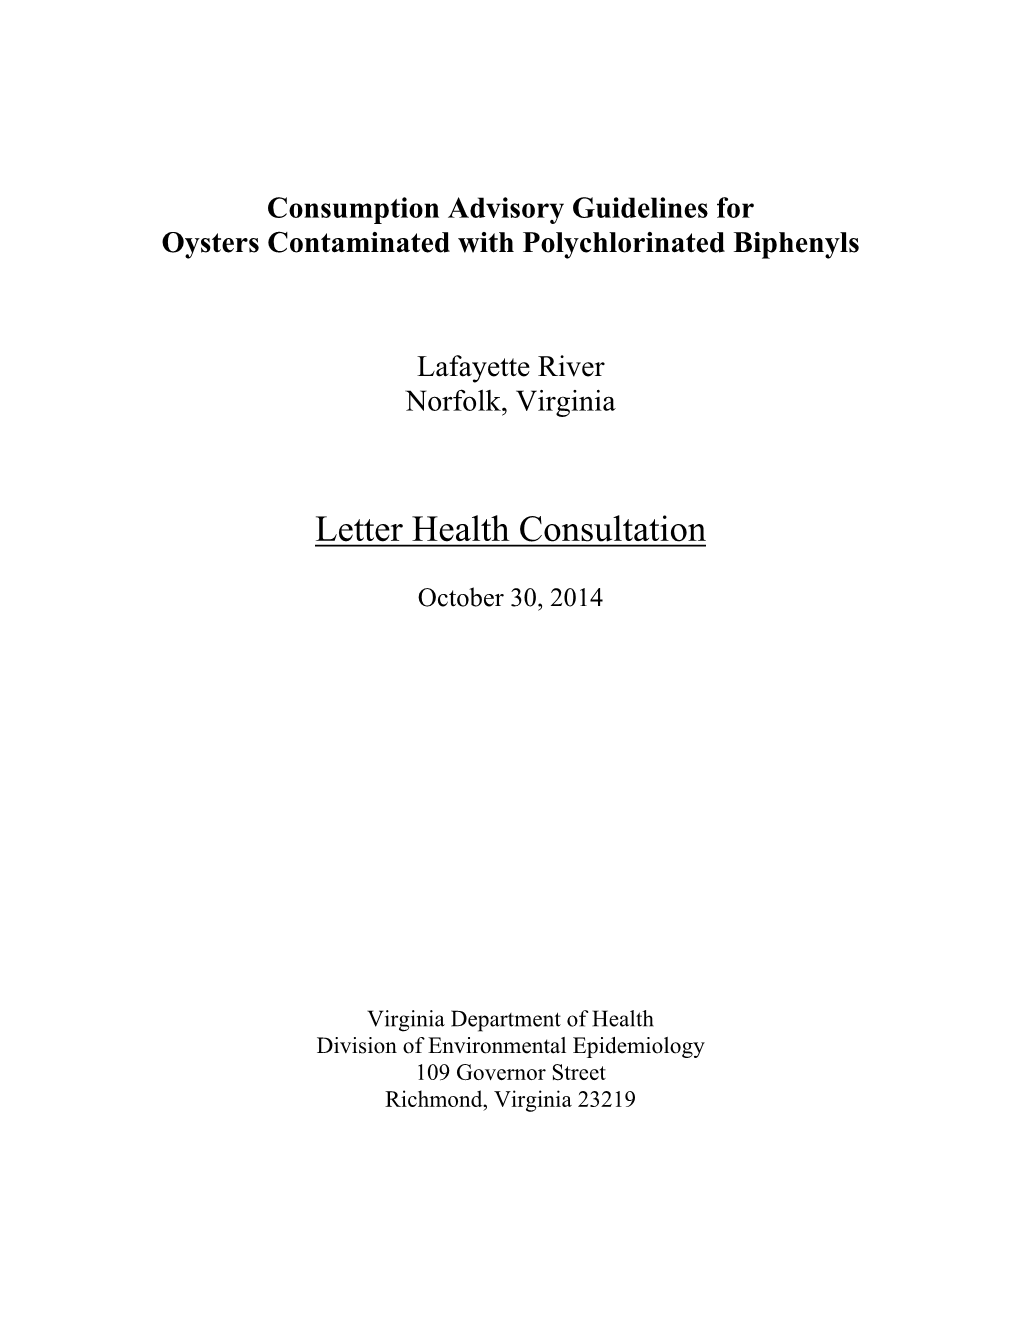 Letter Health Consultation